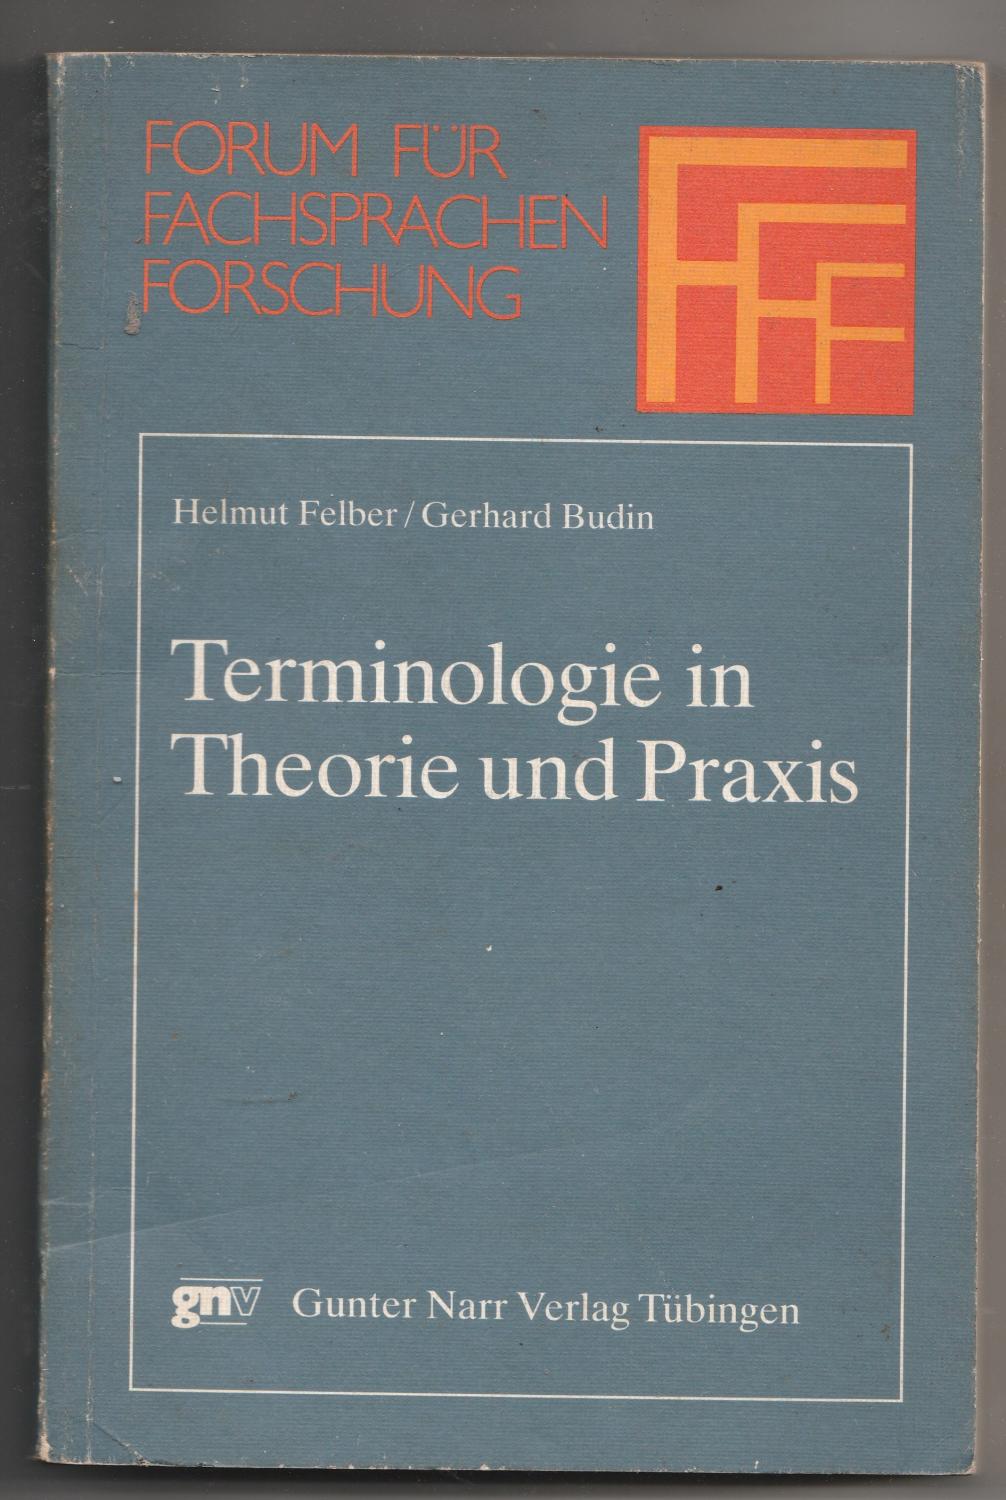 Terminologie in Theorie und Praxis - Helmut Felber; Gerhard Budin